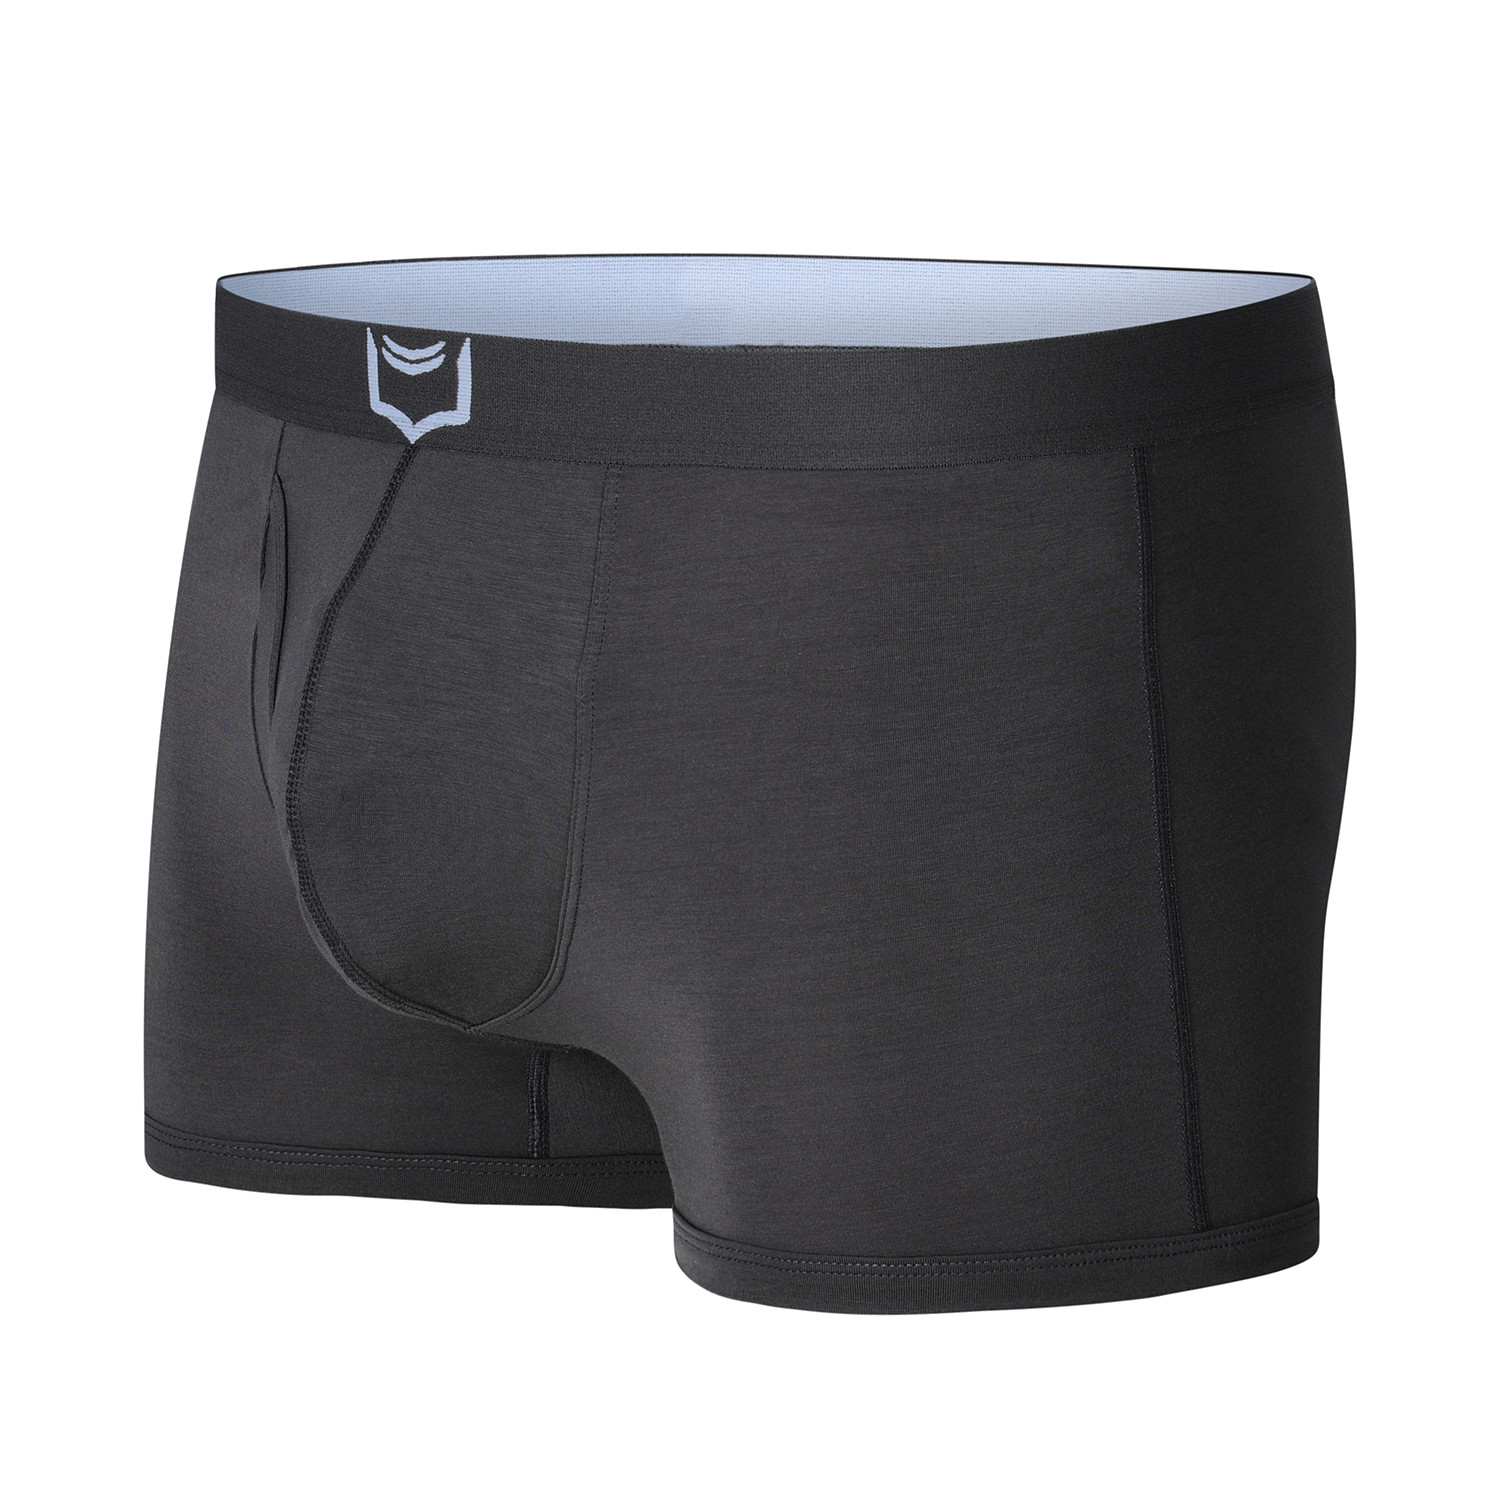 SHEATH 2.1 Men's Dual Pouch Trunks // Gray (M) - Sheath Underwear ...